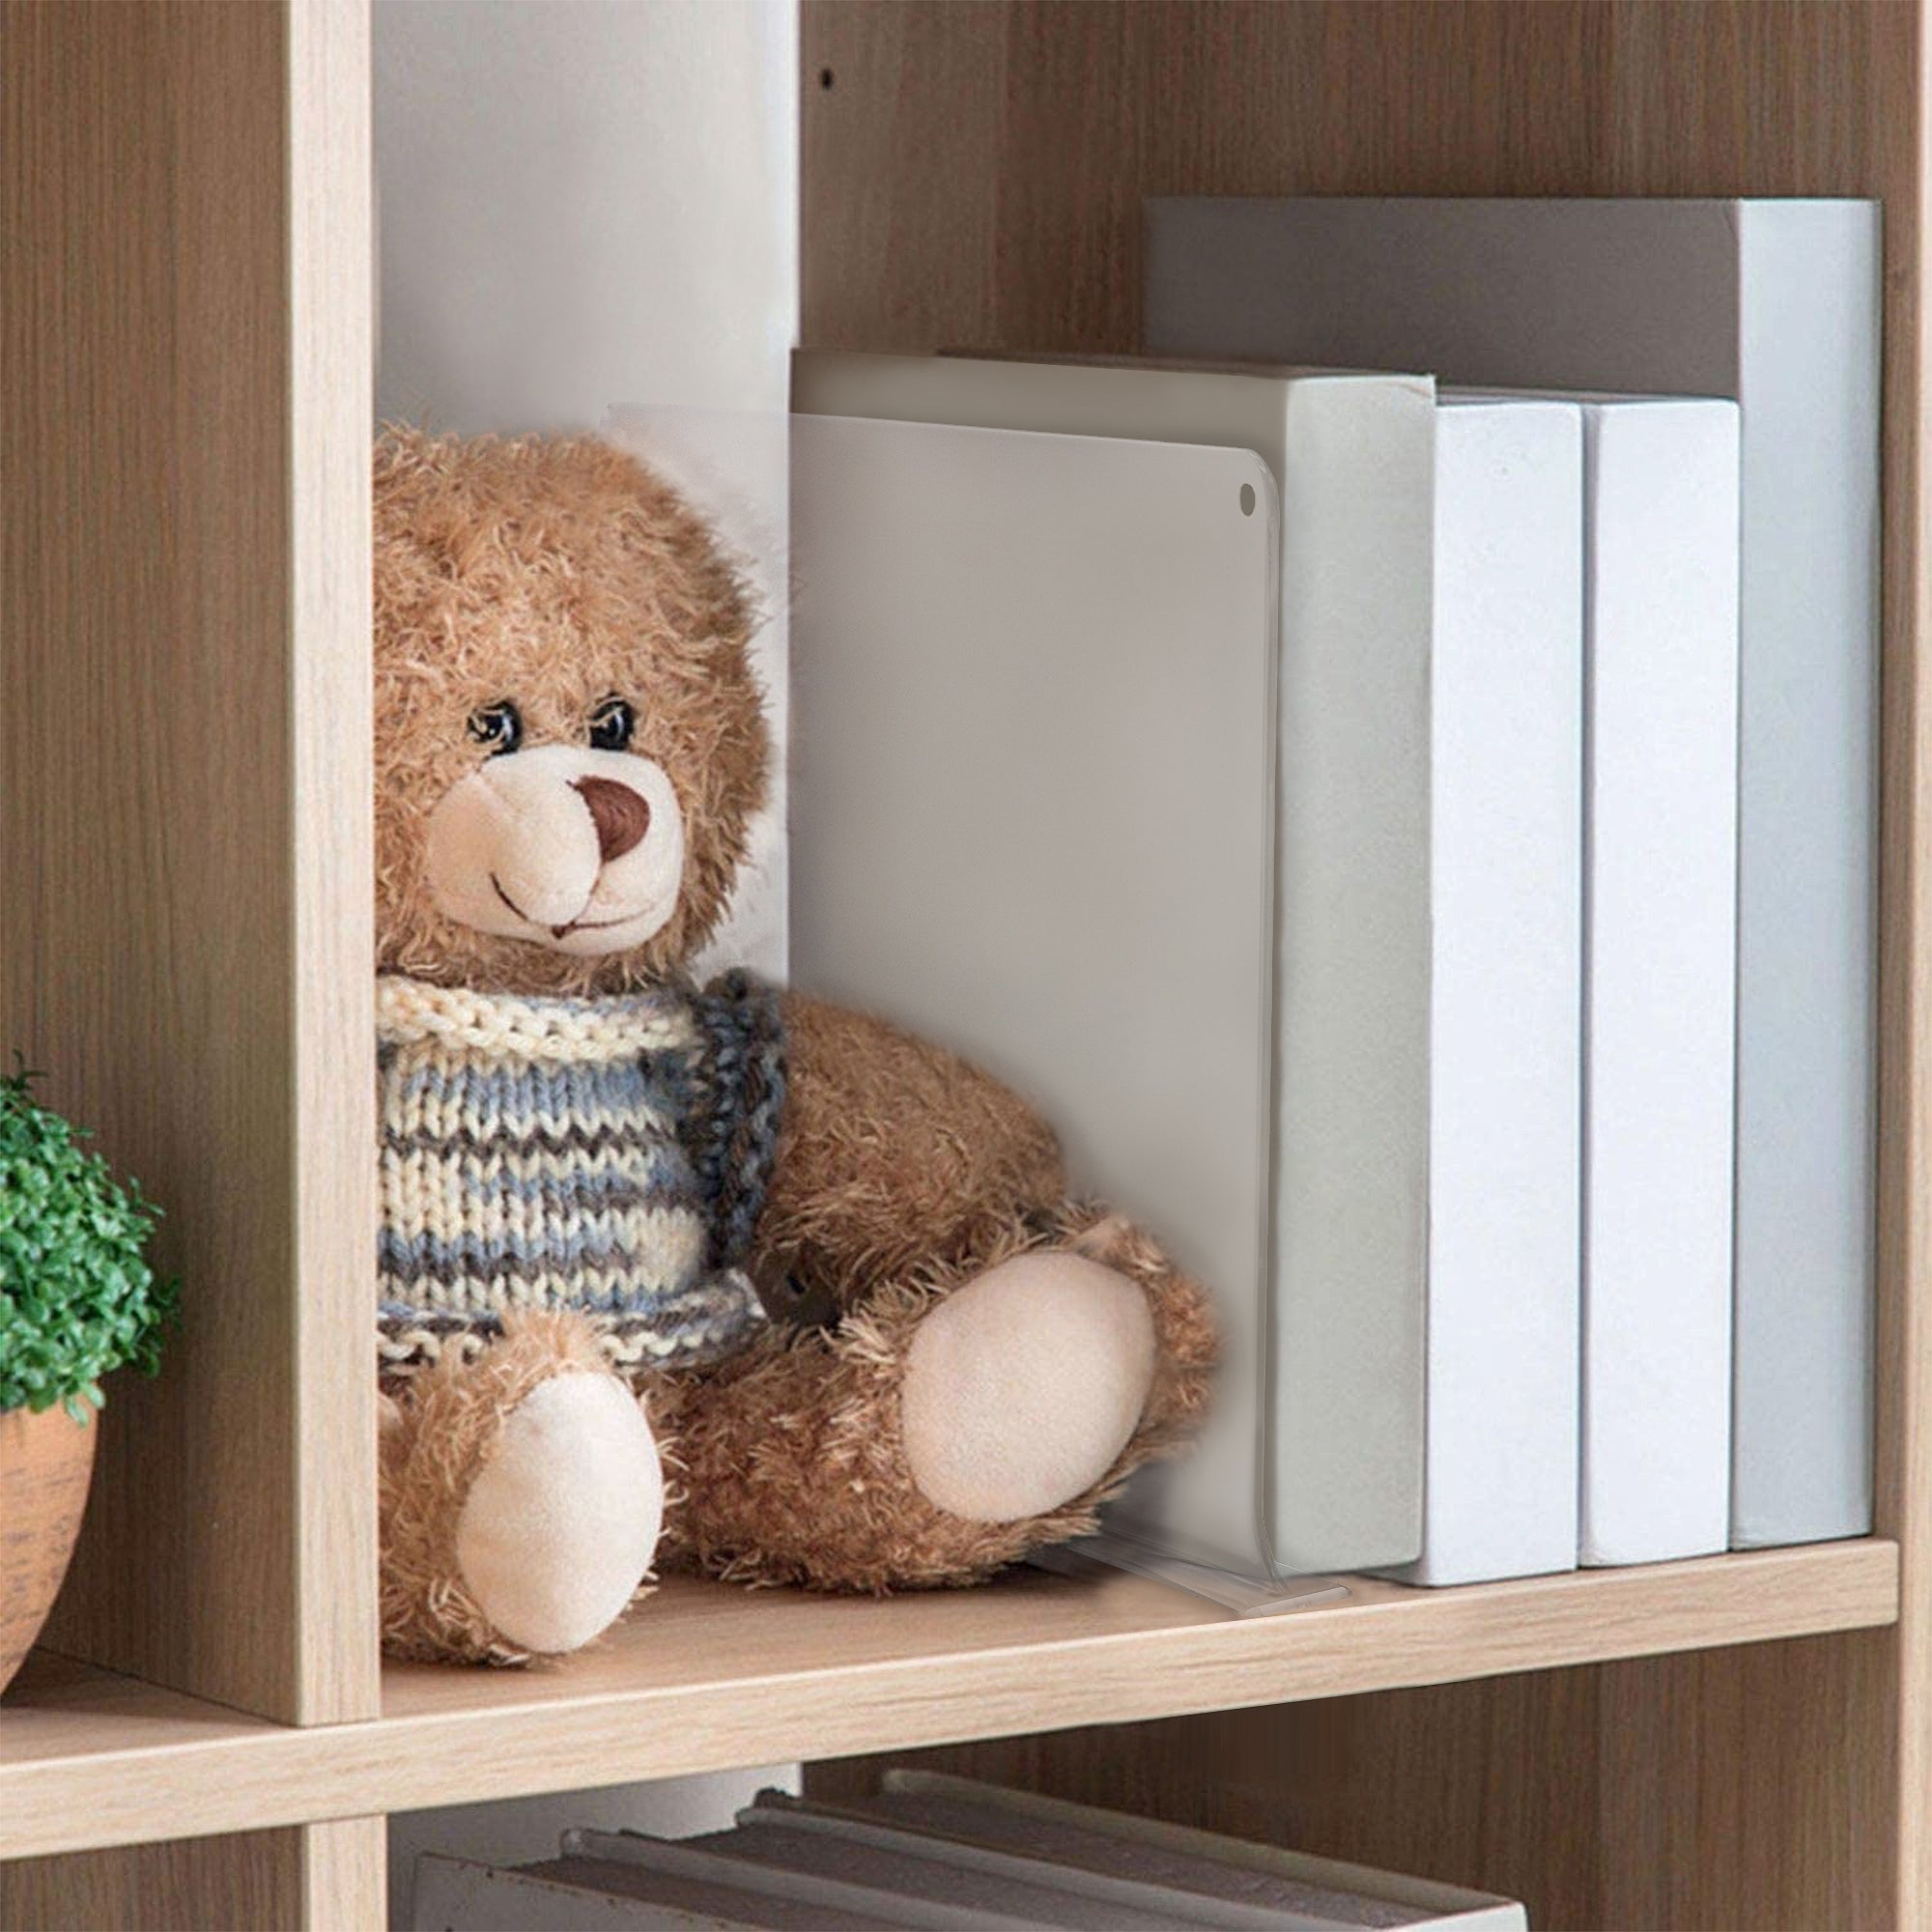 Sorbus Acrylic Shelf Divider With Adhesive Tape for Closet Organizatio –  Sorbus Home